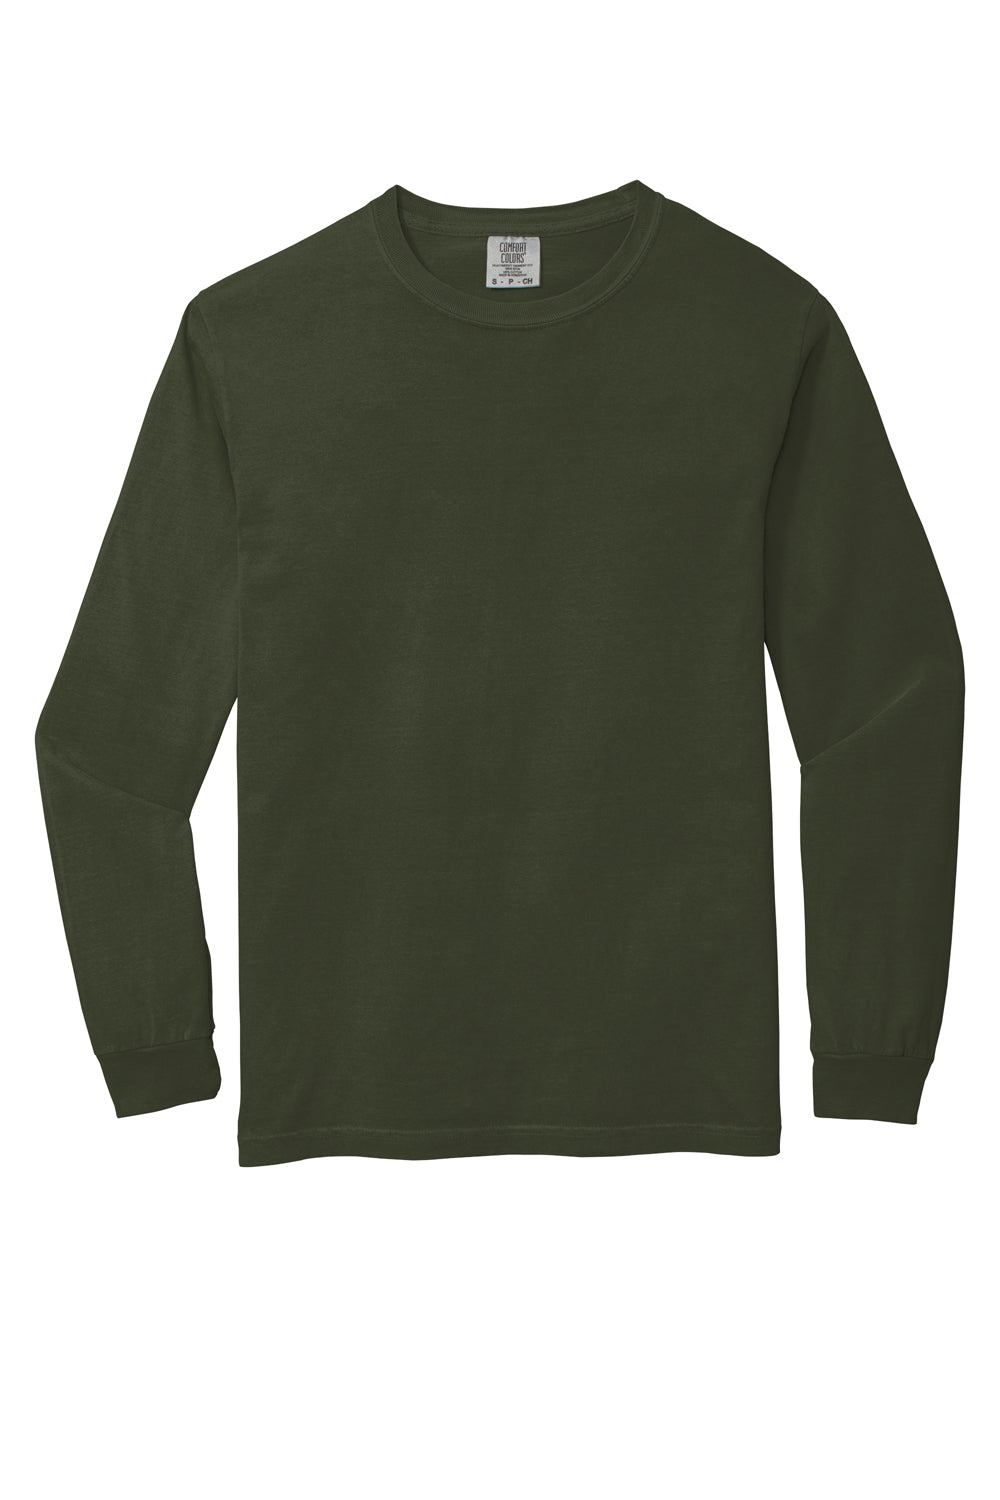 Comfort Colors 6014/C6014 Mens Long Sleeve Crewneck T-Shirt Hemp Green Flat Front